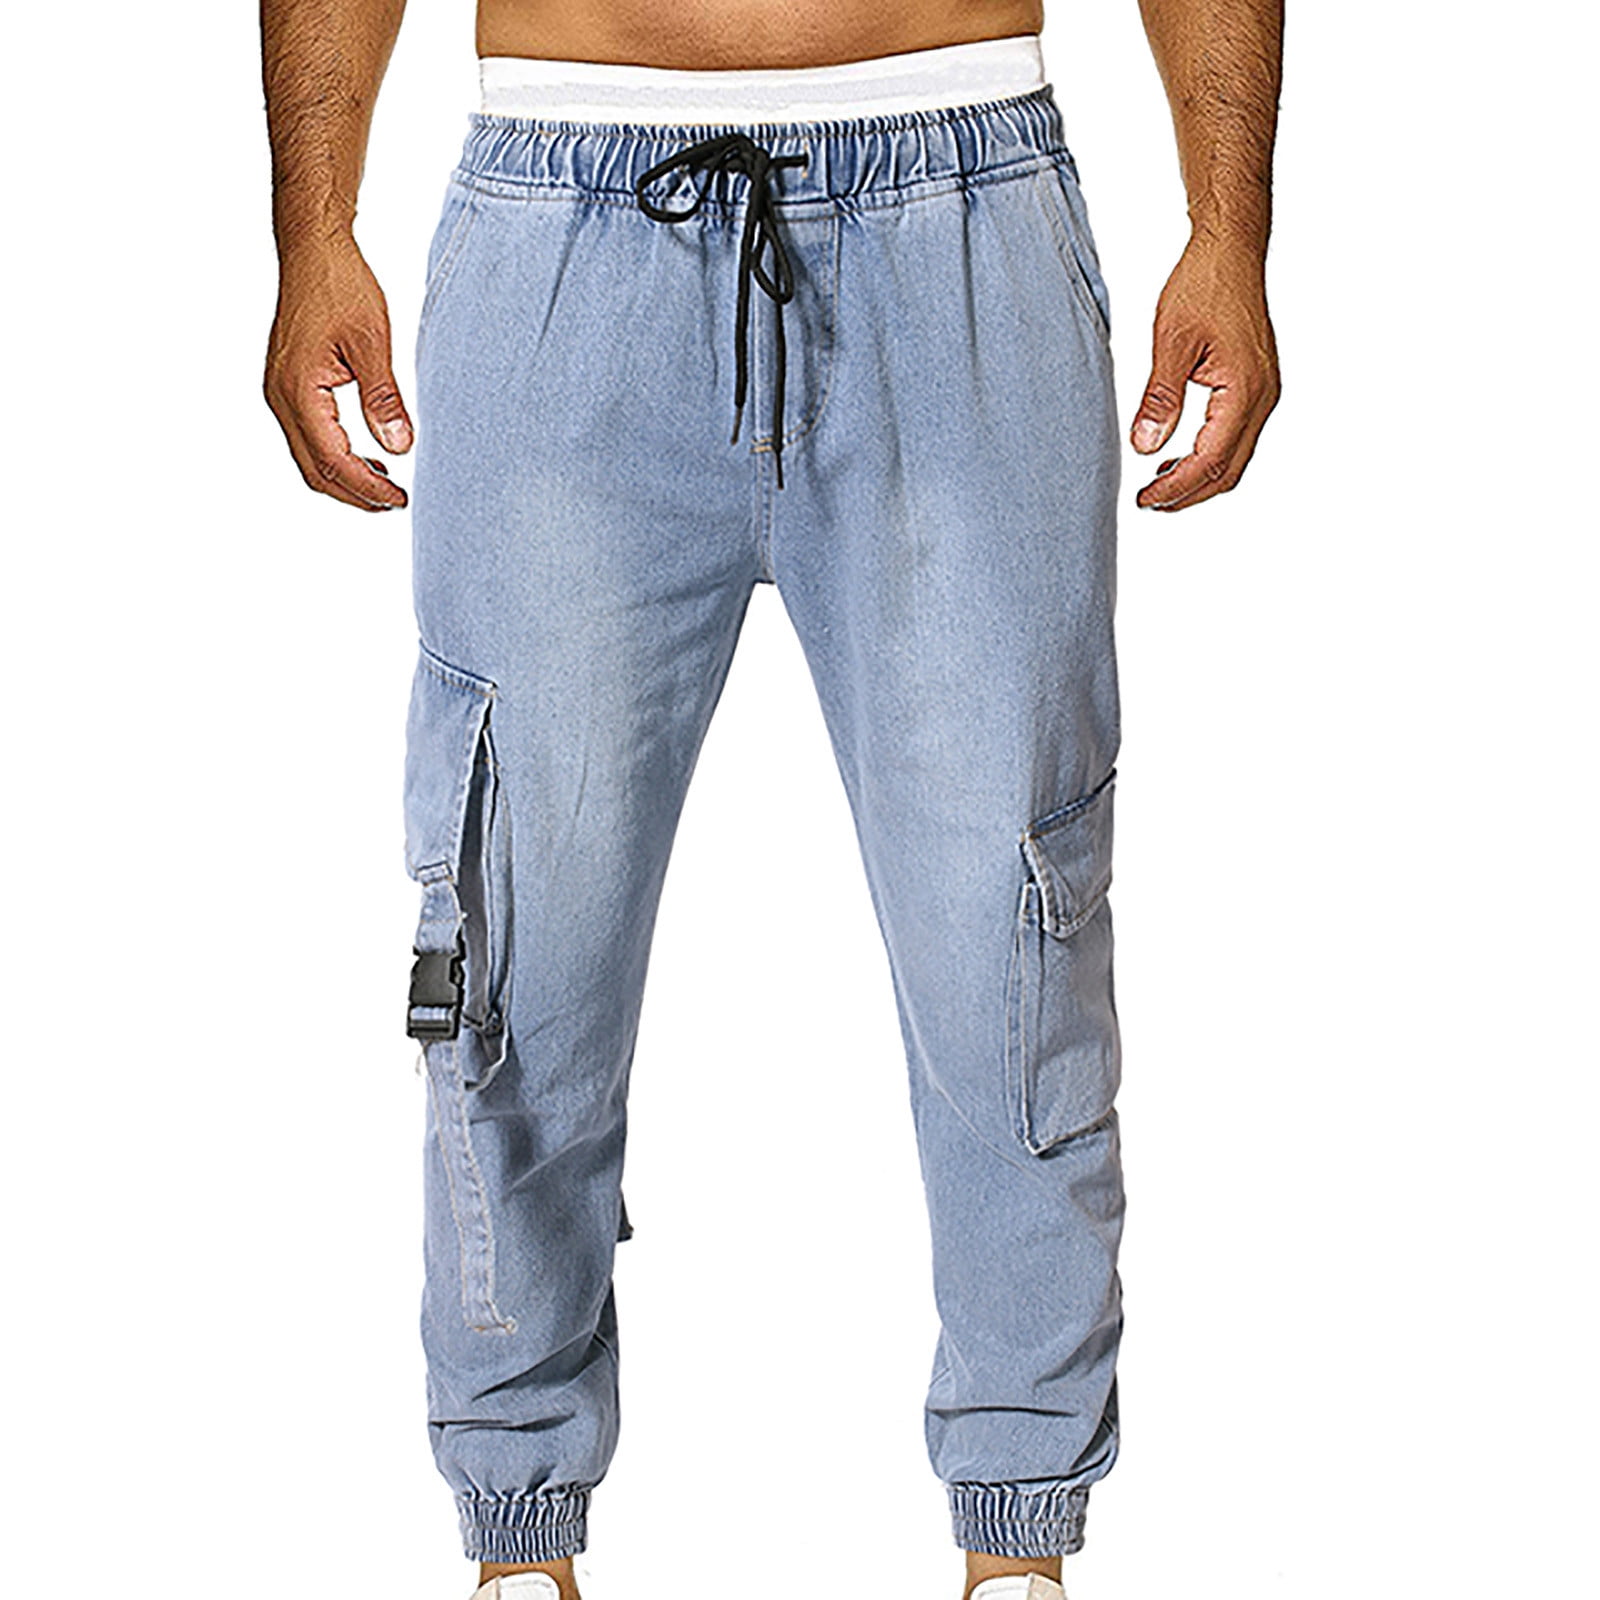 YWDJ Jeans for Relaxed Fit Men Casual Sport Pants Running Joggers Sweatpants Denim Trousers Light blue XXL - Walmart.com